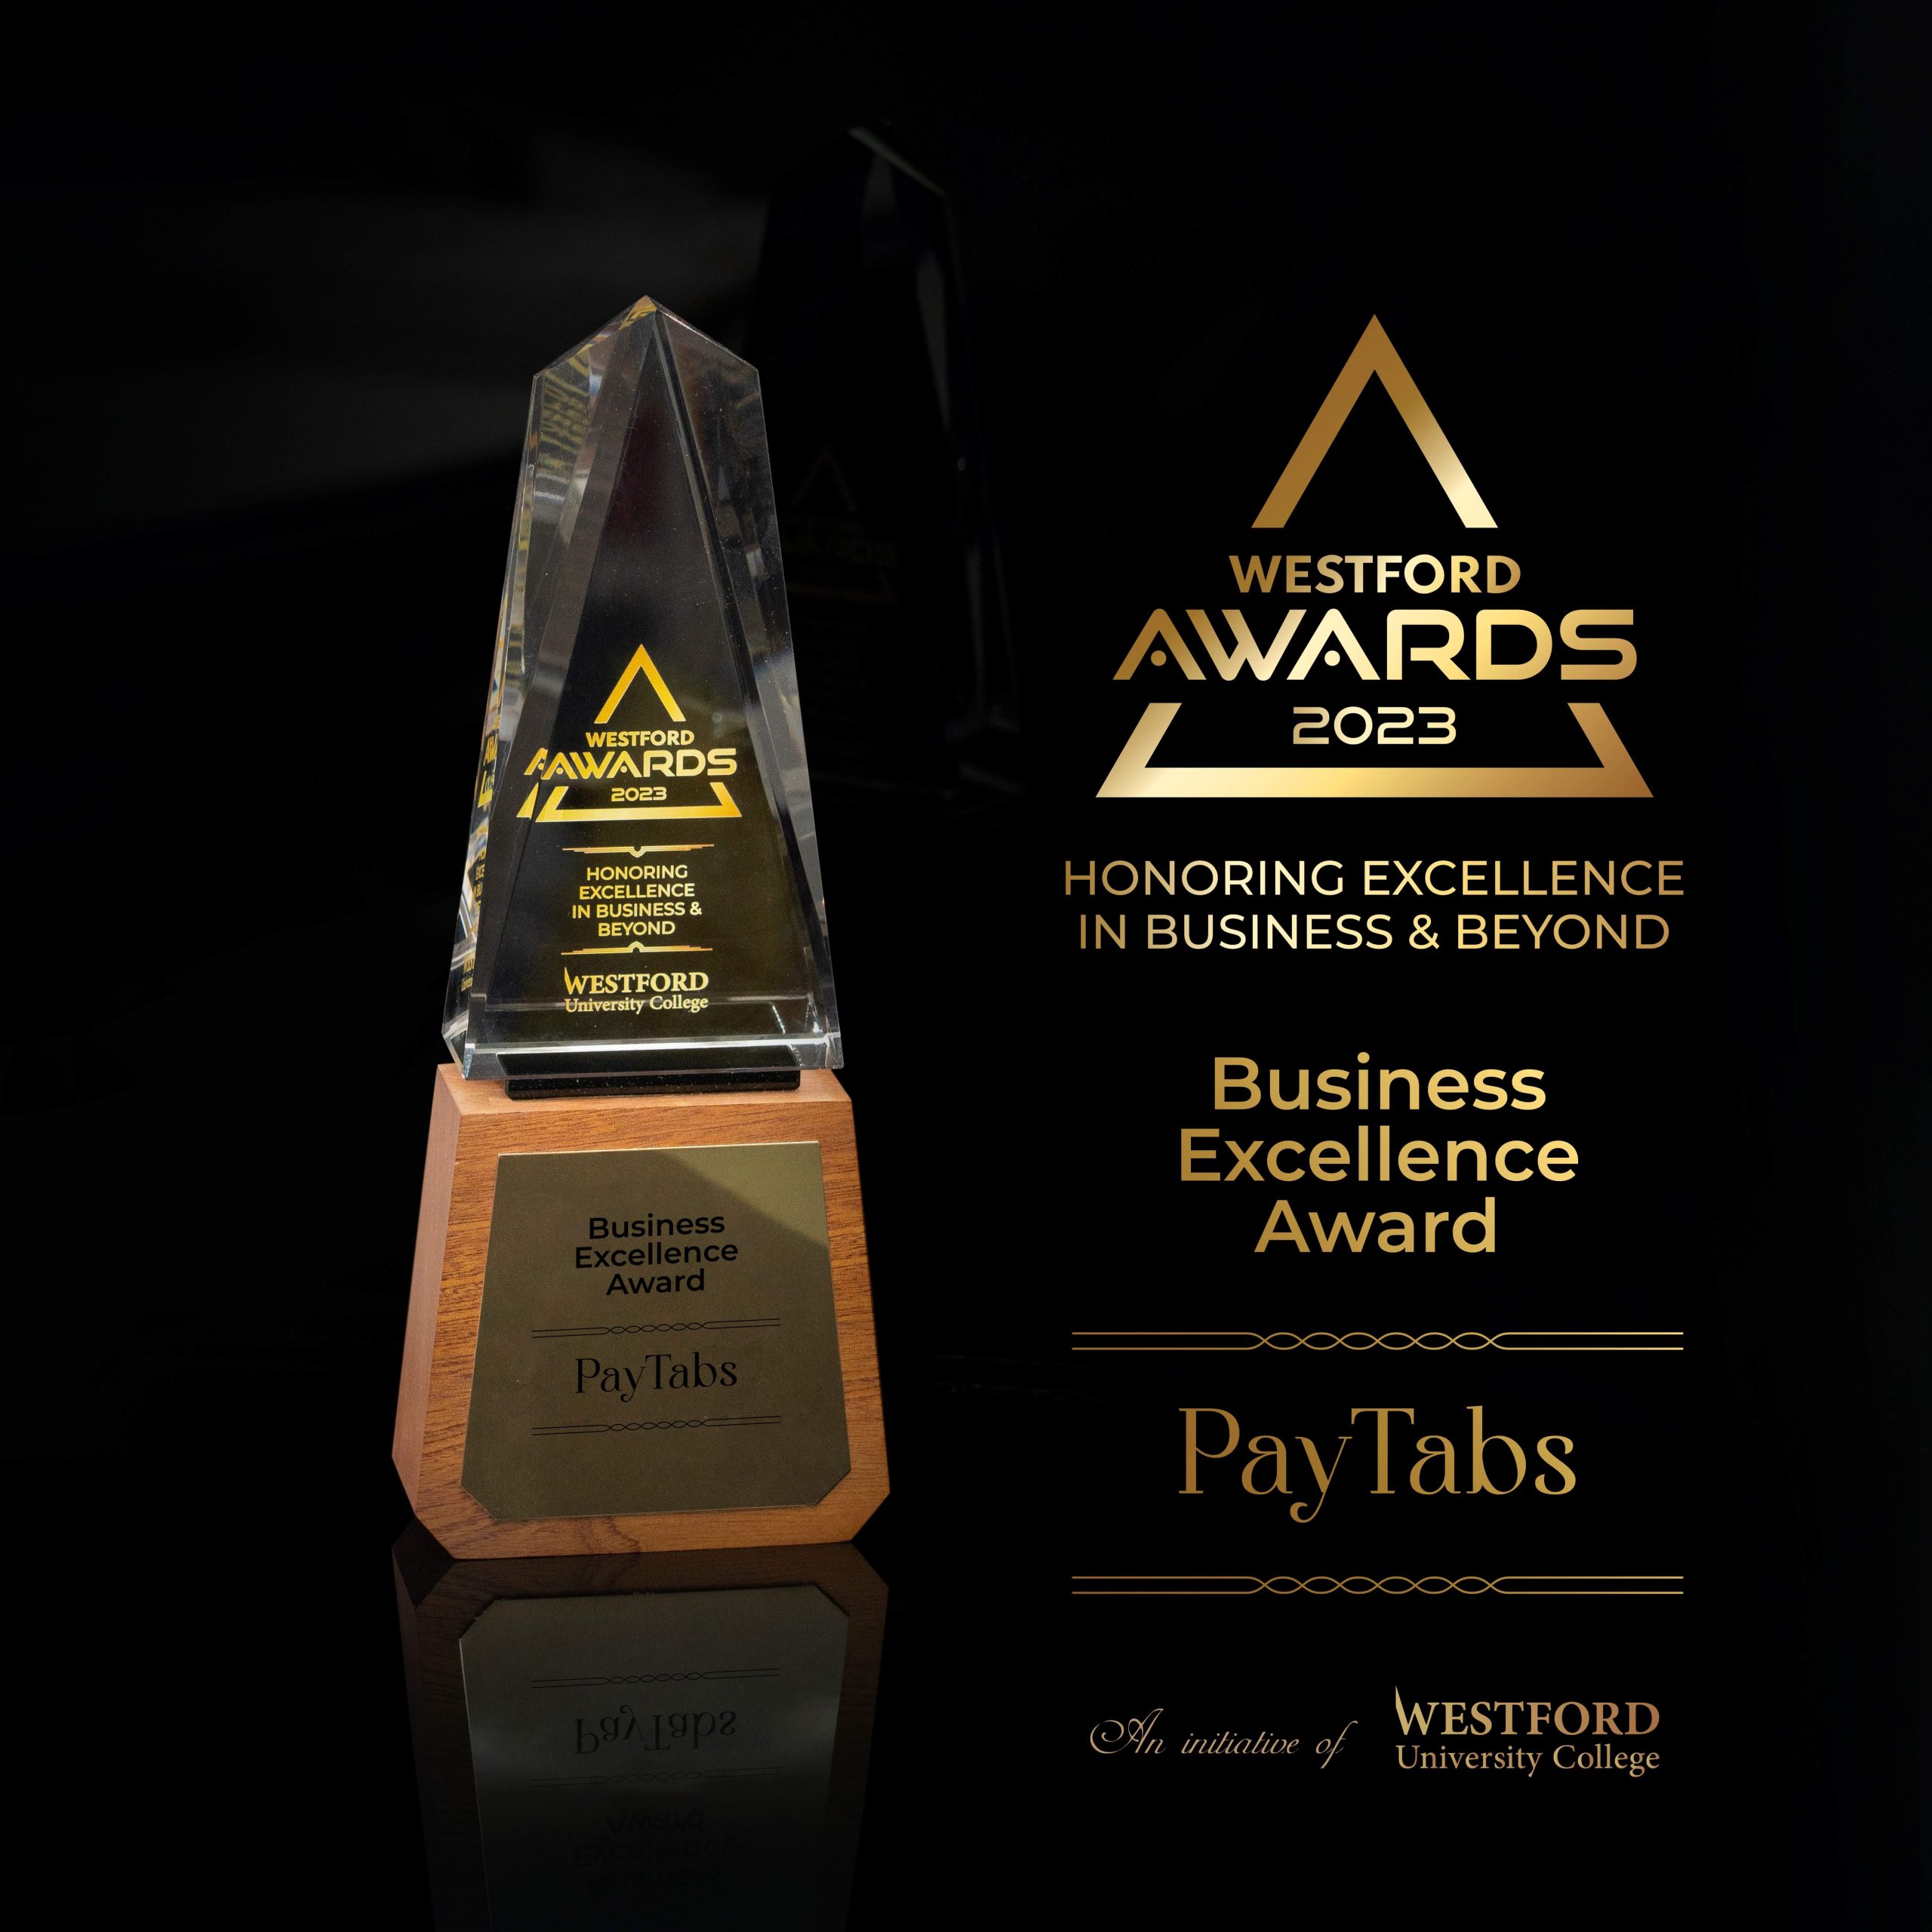 Business Excellence Award - Westford Awards 2023